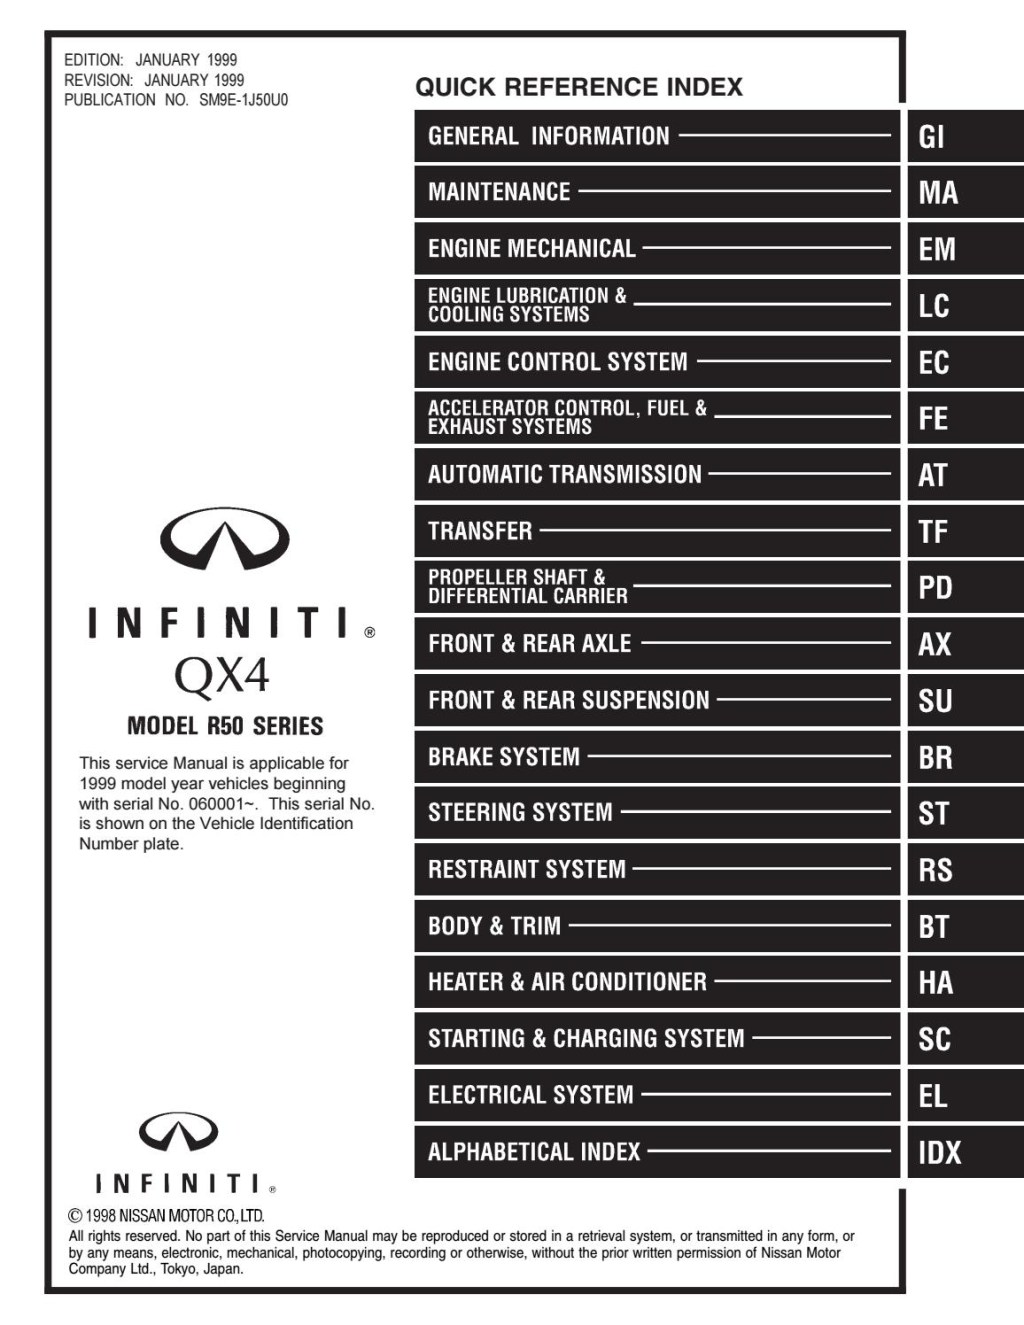 Picture of: infiniti qx service repair manual by  – Issuu